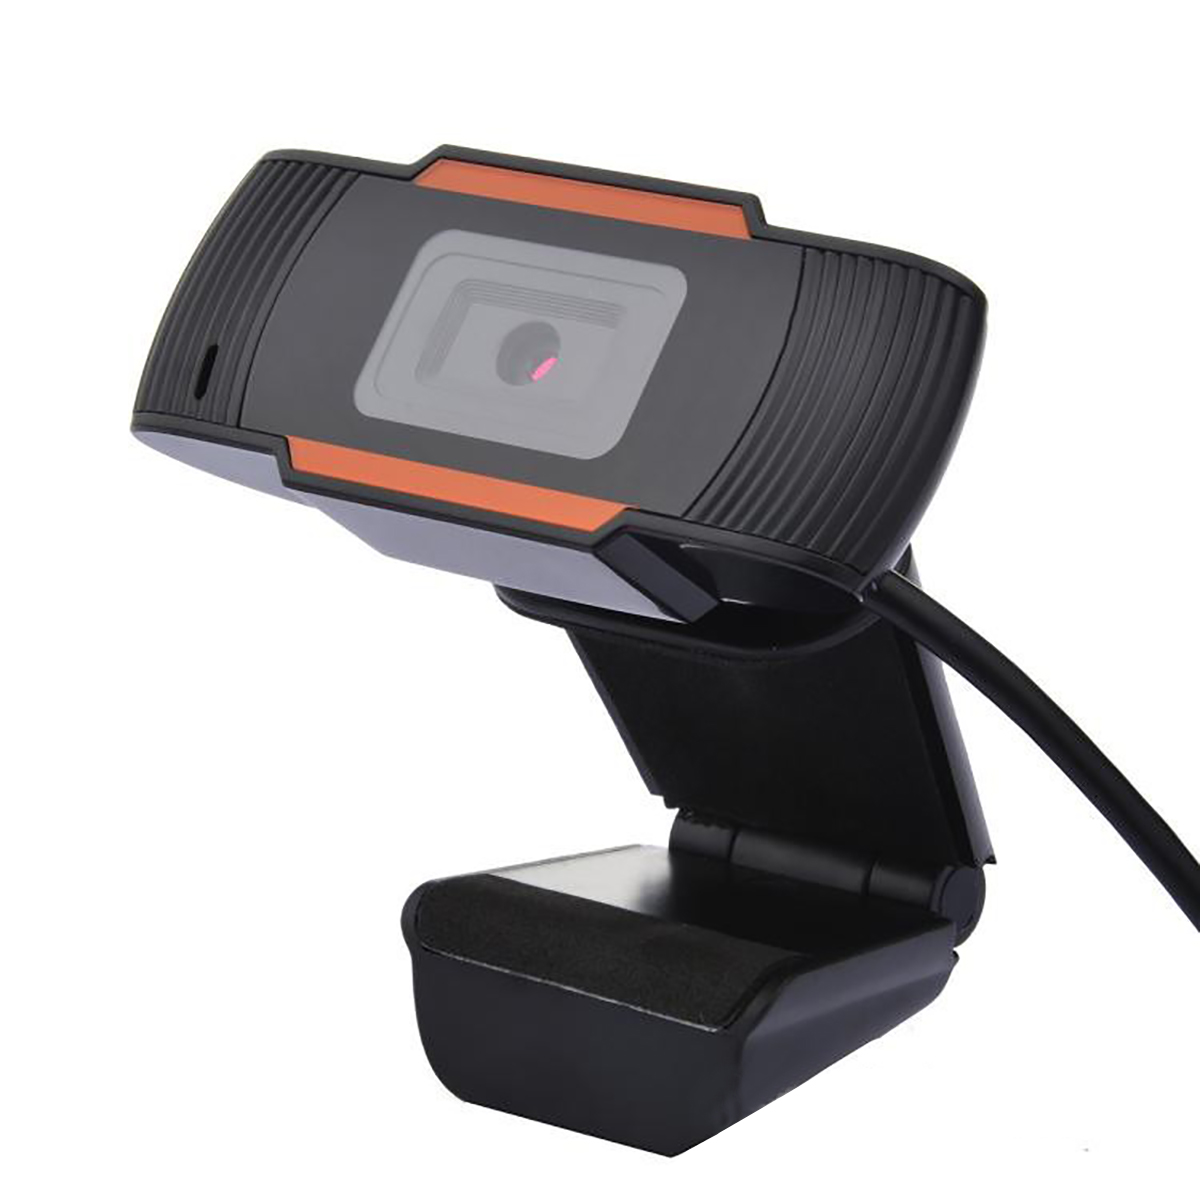 HD Webcam Auto Focusing Web USB 2.0 Camera With Microphone For Laptop Desktop